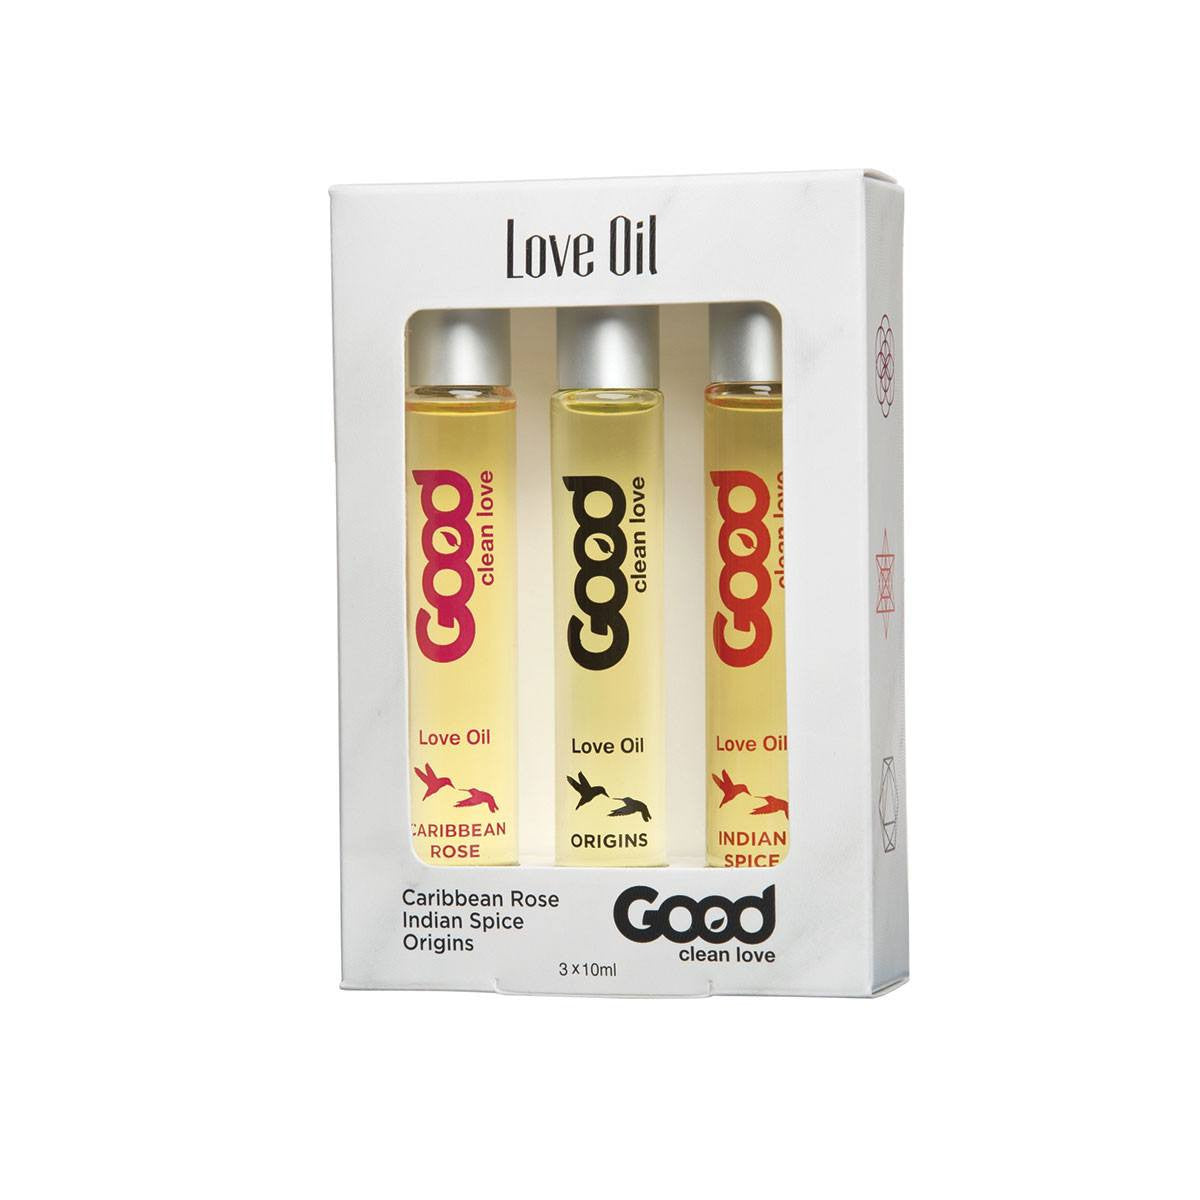 Love Oils Gift Set by Good Clean Love - Hamilton Park Electronics